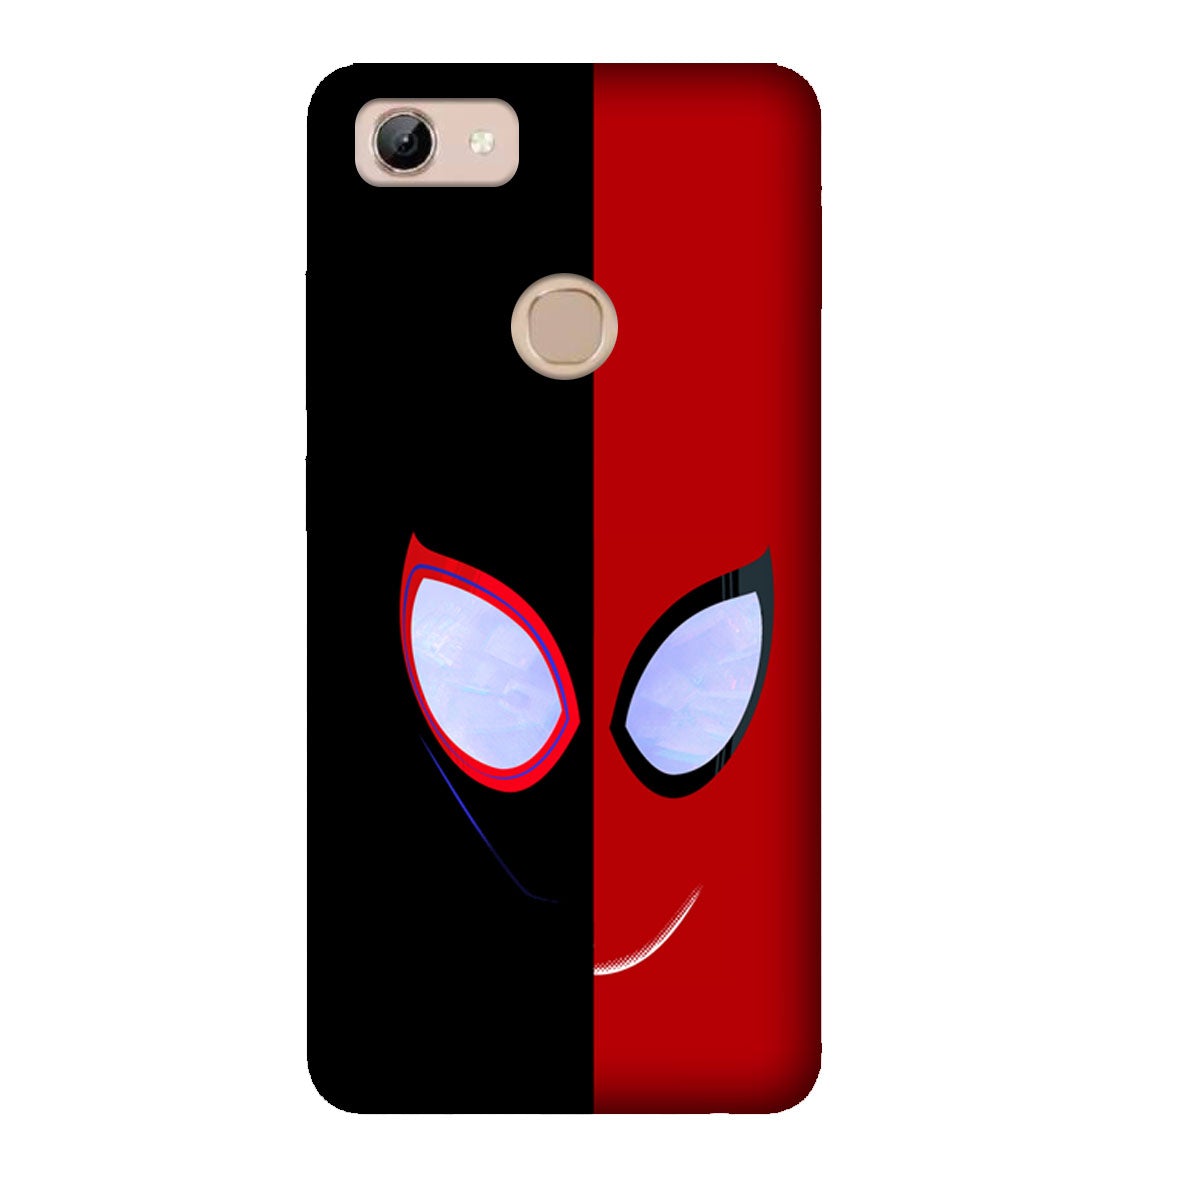 Spider Man - Black & Red - Mobile Phone Cover - Hard Case - Vivo